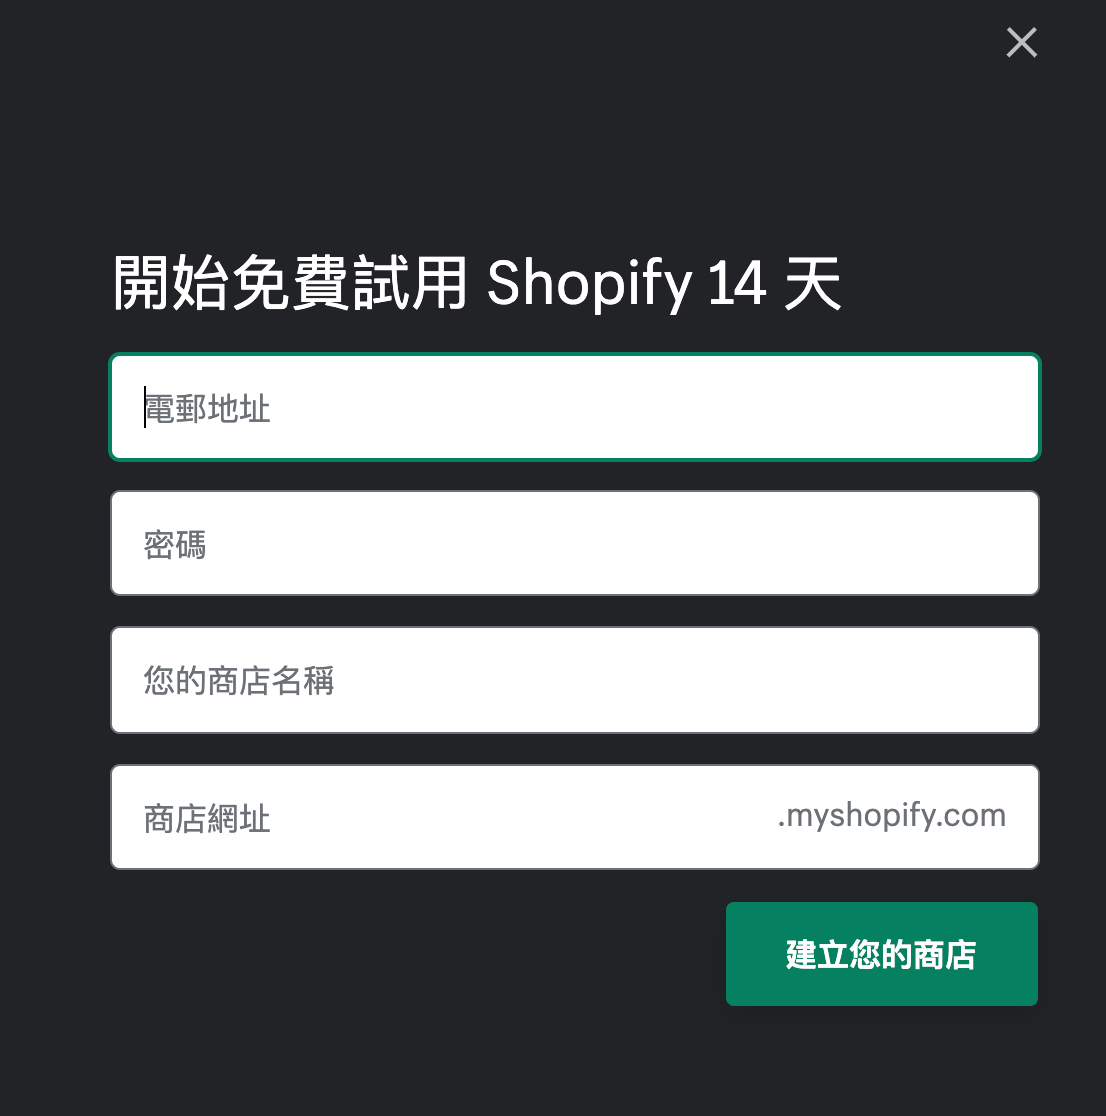 Free Trial Shopify